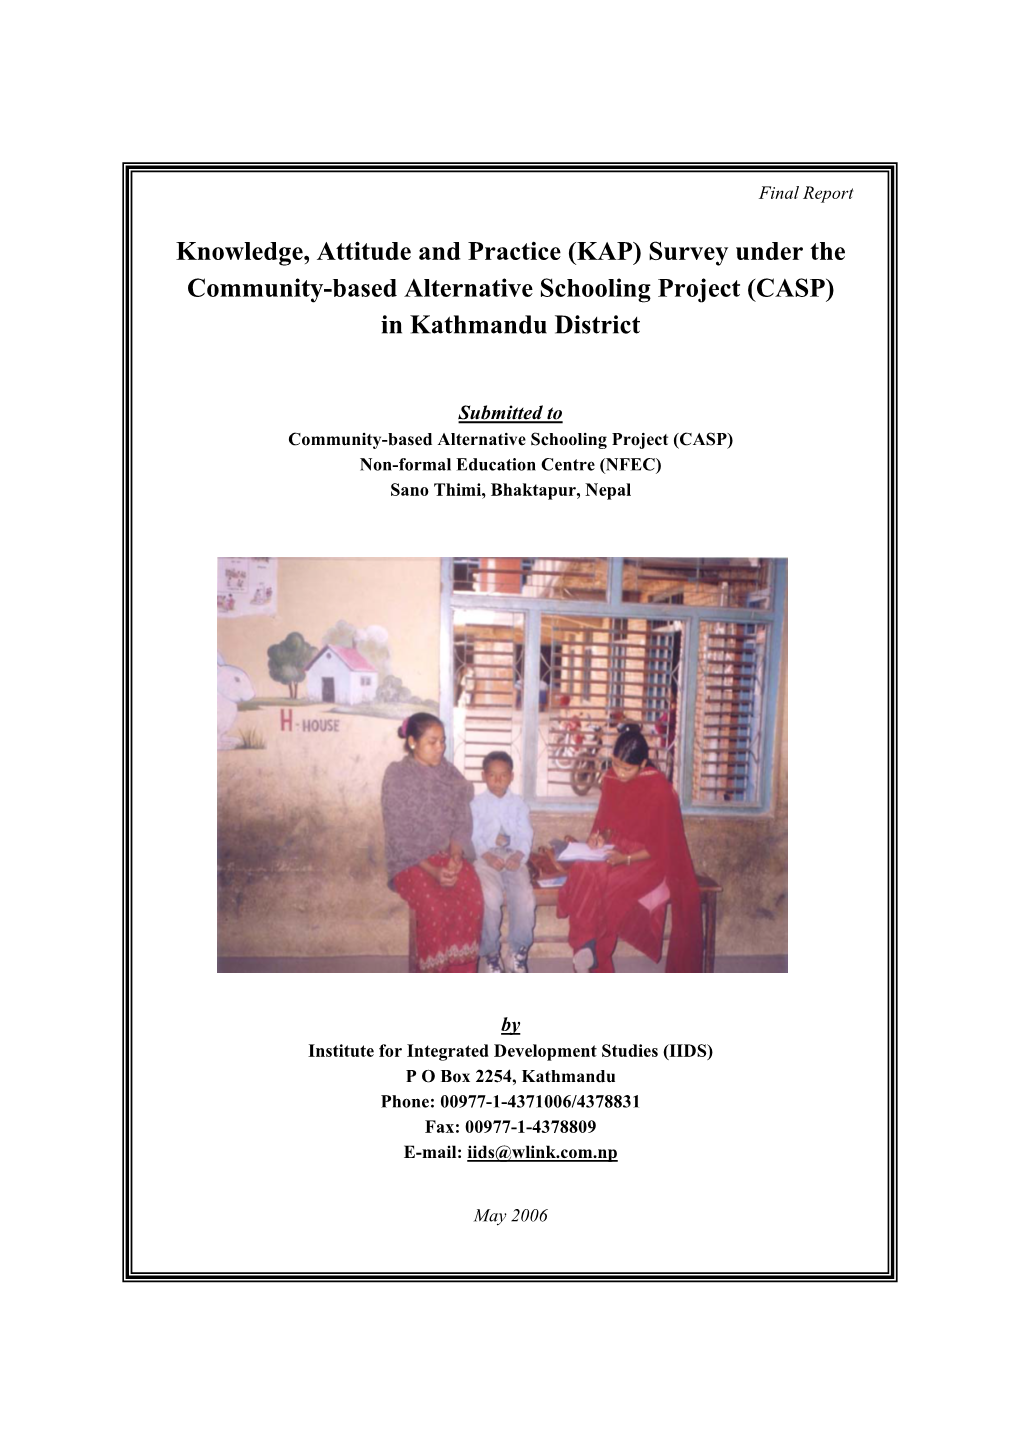 Knowledge, Attitude and Practice (KAP) Survey Under the Community-Based Alternative Schooling Project (CASP) in Kathmandu District